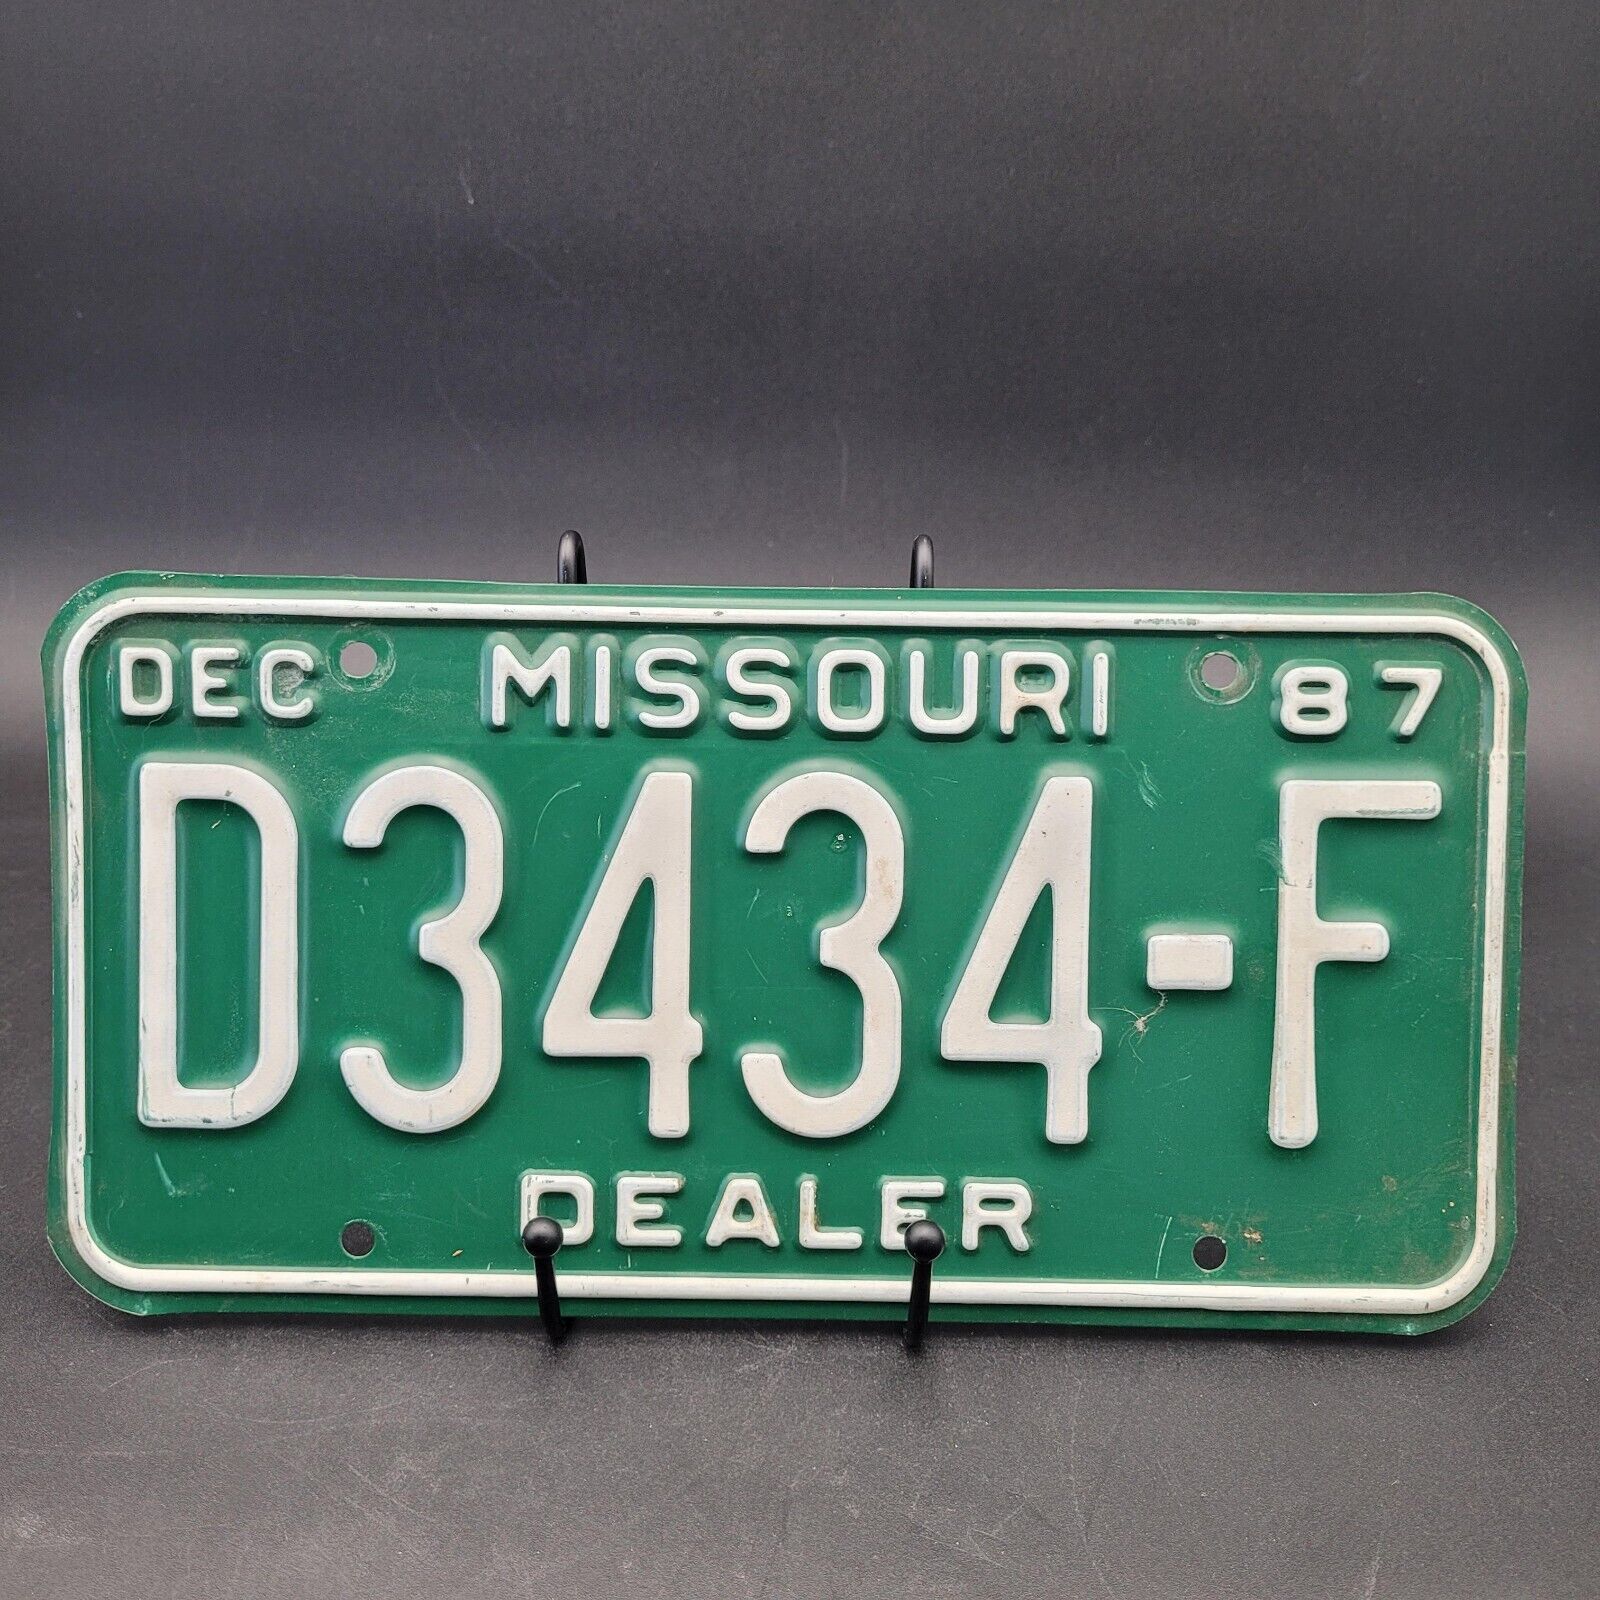 Primary image for Vintage Aluminum DEC 1987 Green White Missouri Dealership License Plate D3434-F